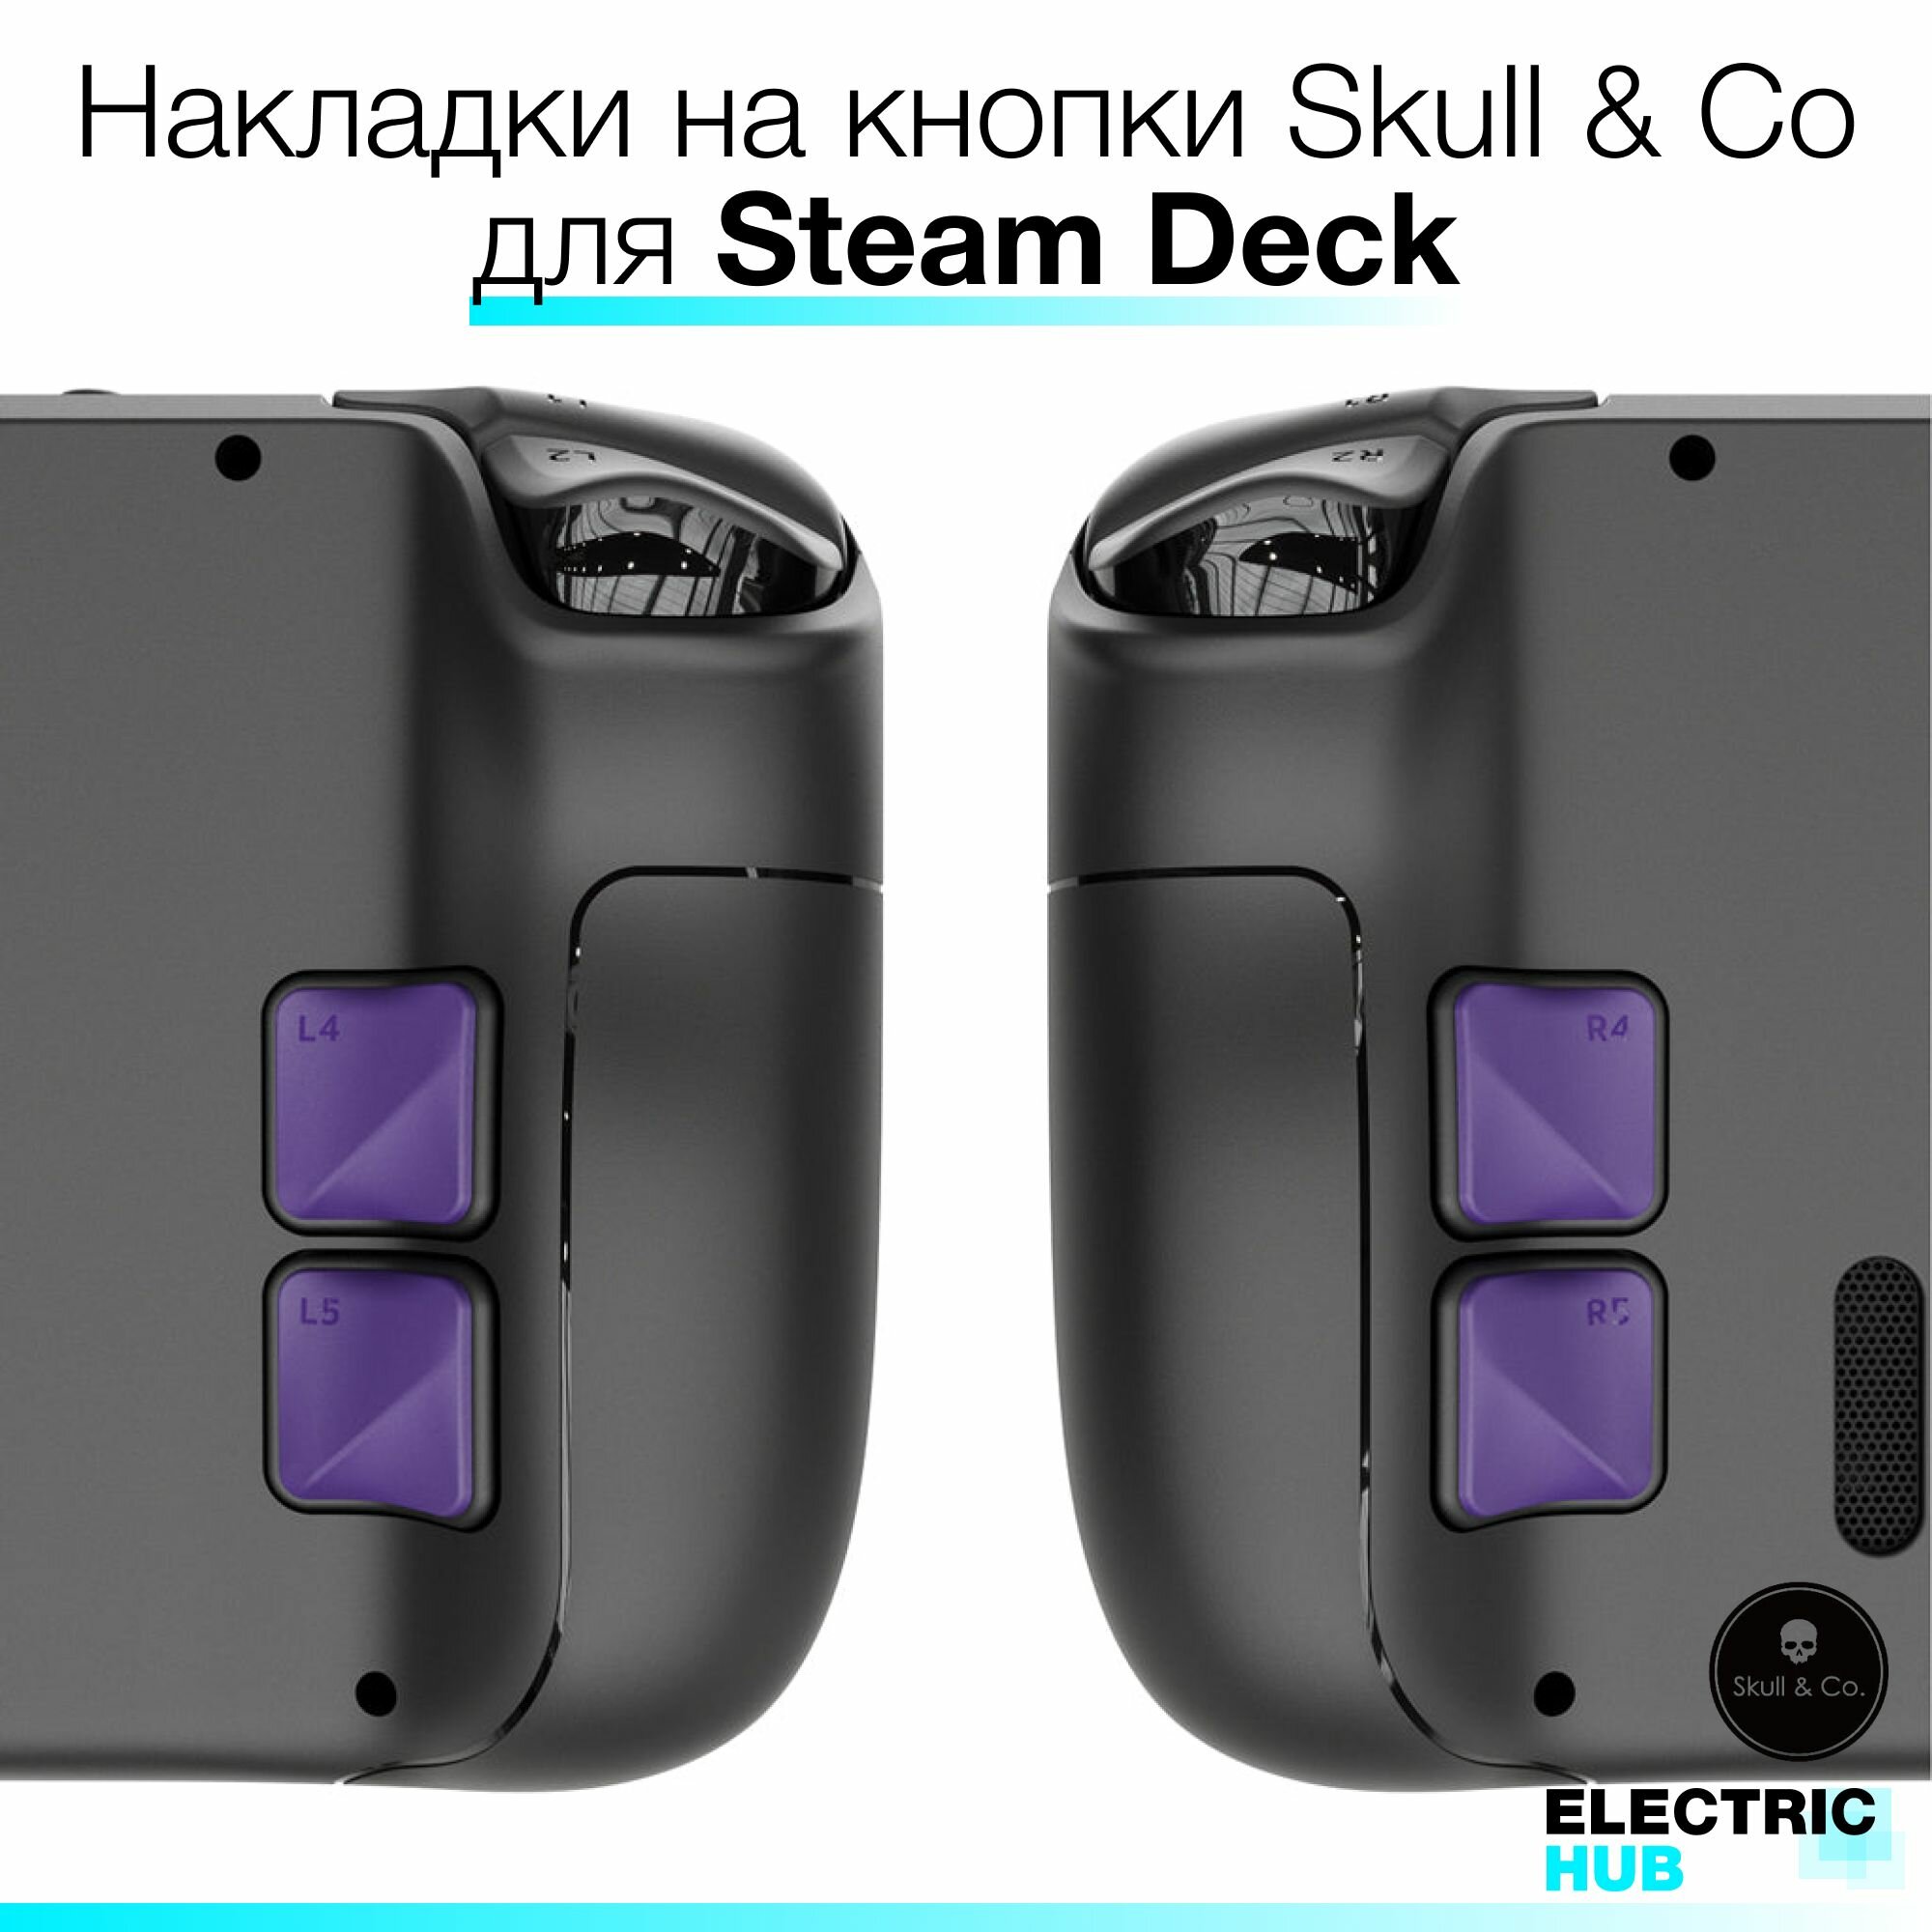 Премиум накладки на кнопки Skull & Co для Steam Deck/OLED, комплект из 4 штук, цвет Фиолетовый (Galactic Purple)